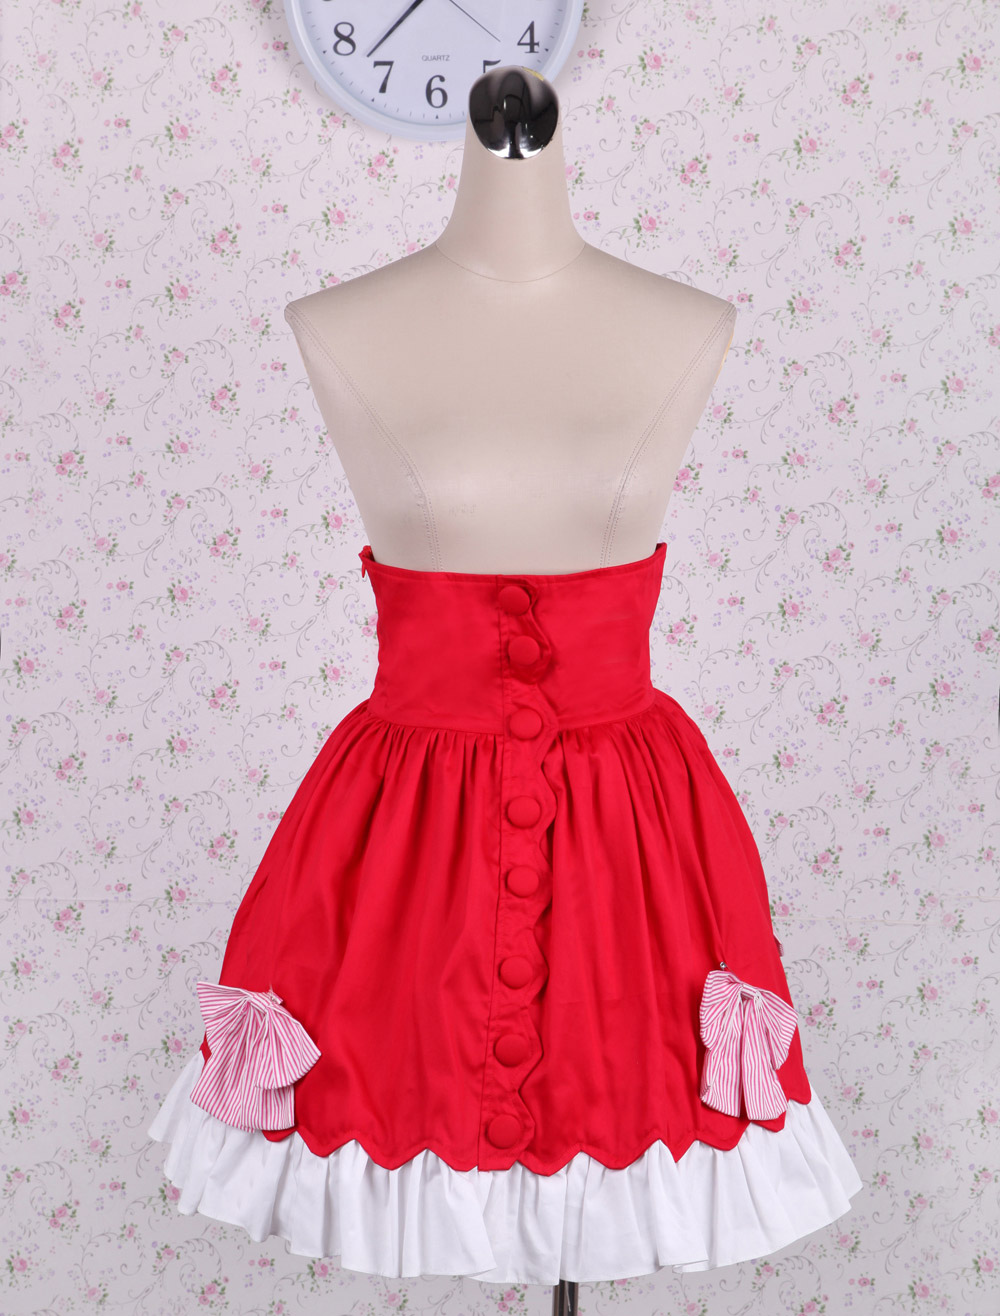 Cotton Red Bow Buttons Cotton Lolita Skirt - Milanoo.com